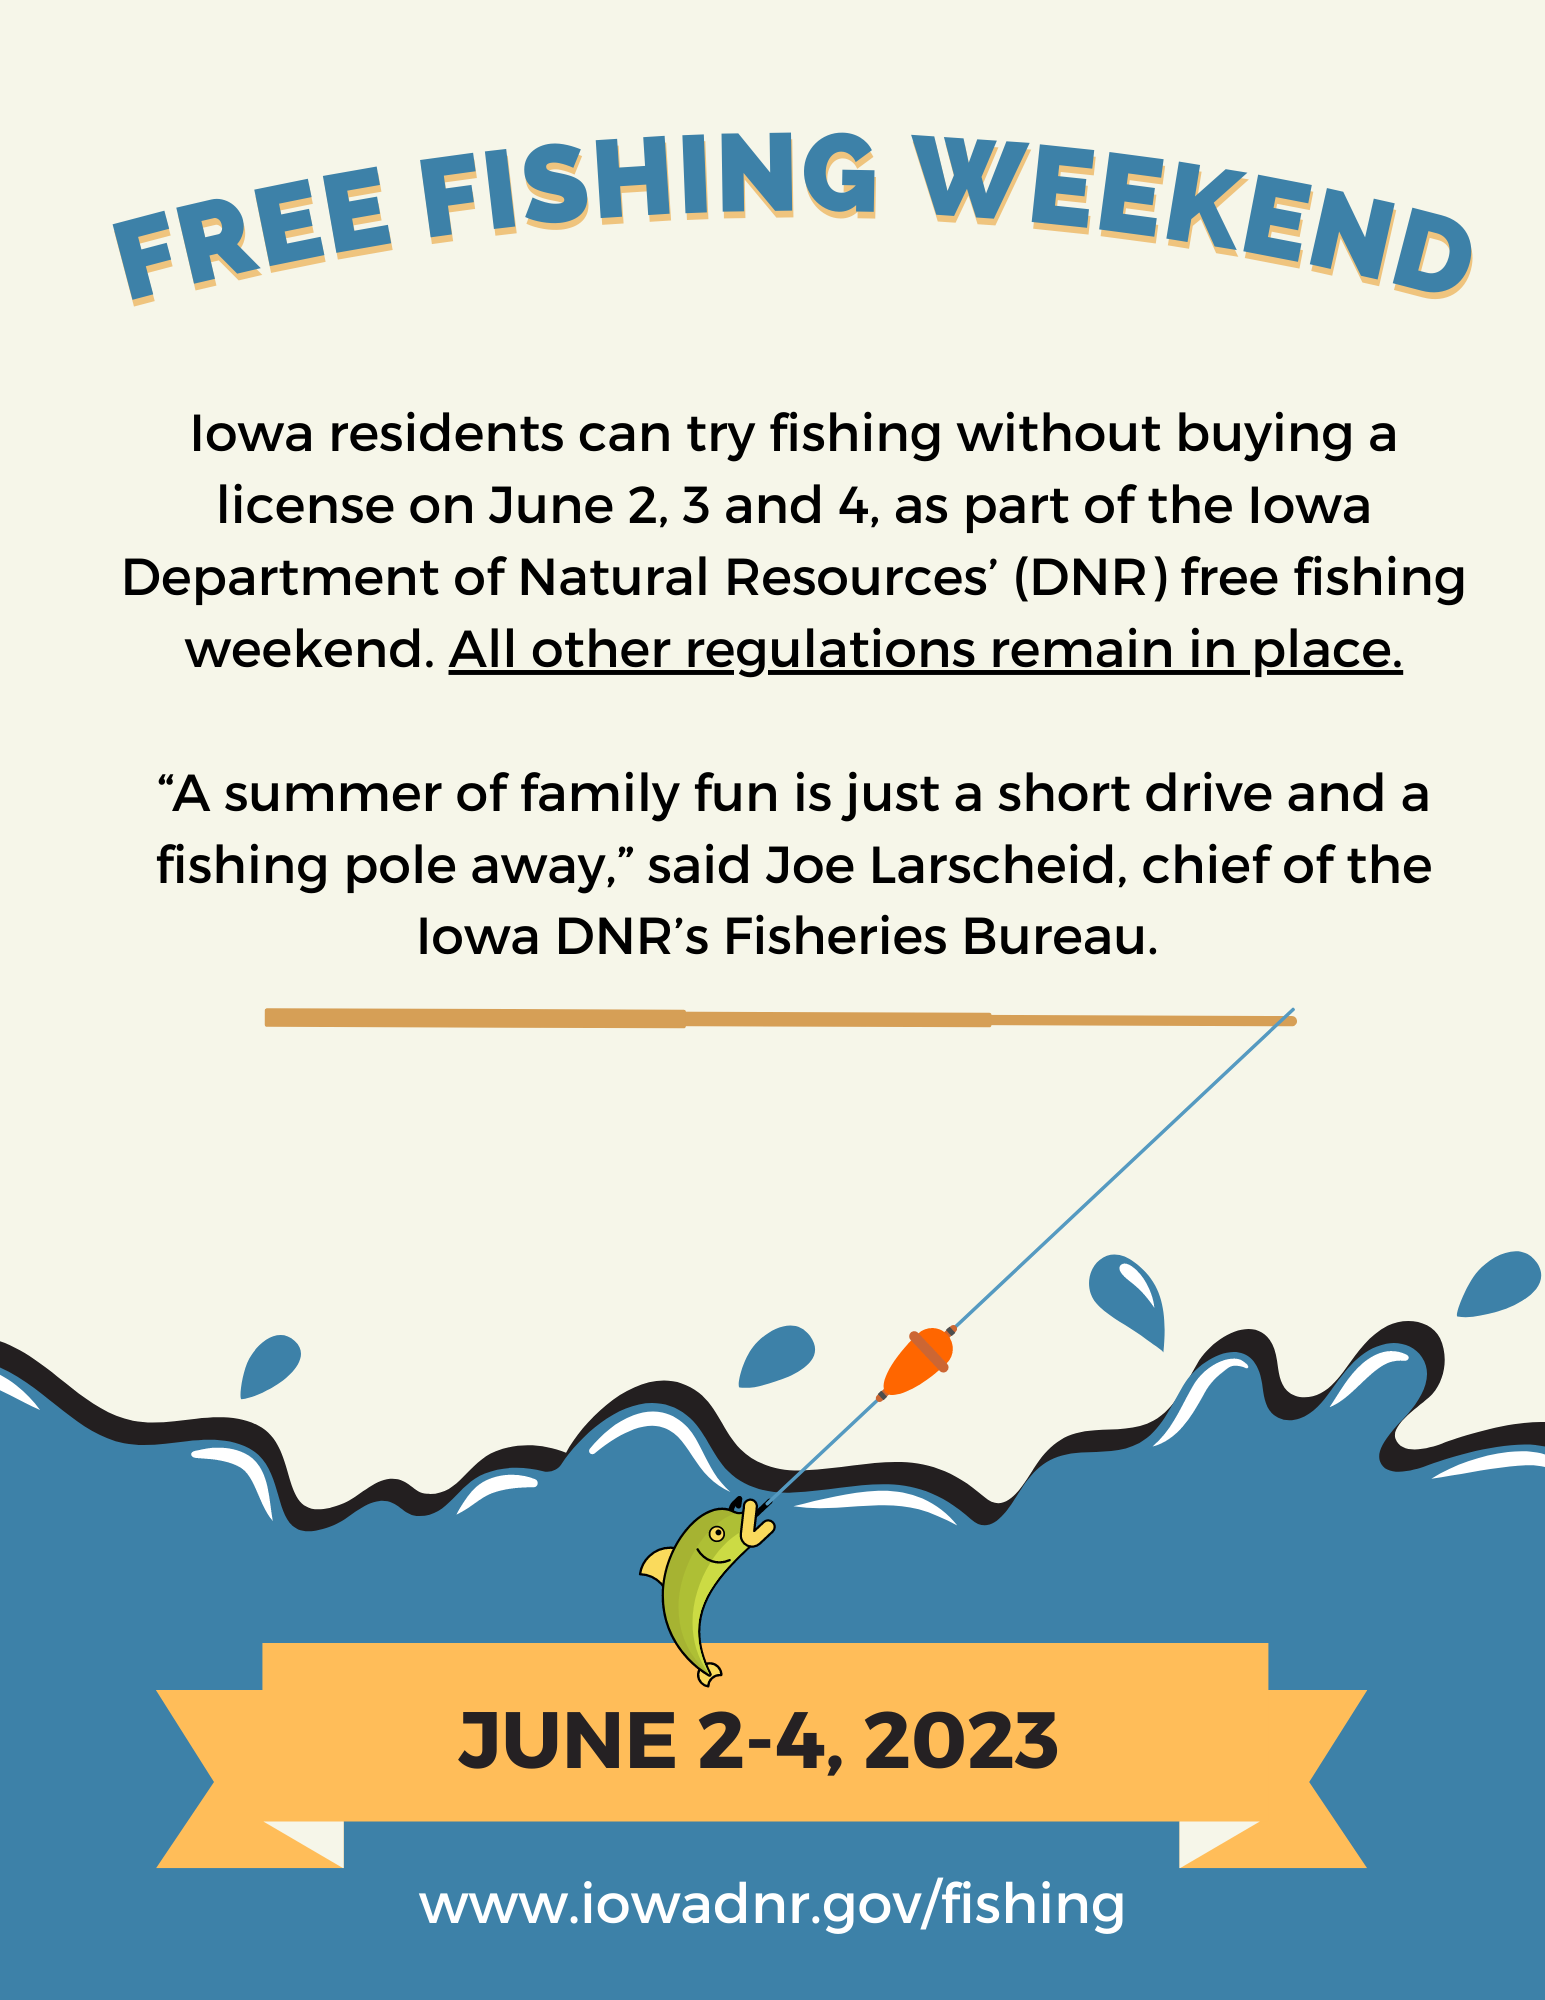 Share the fun of fishing during free fishing weekend June 2-4